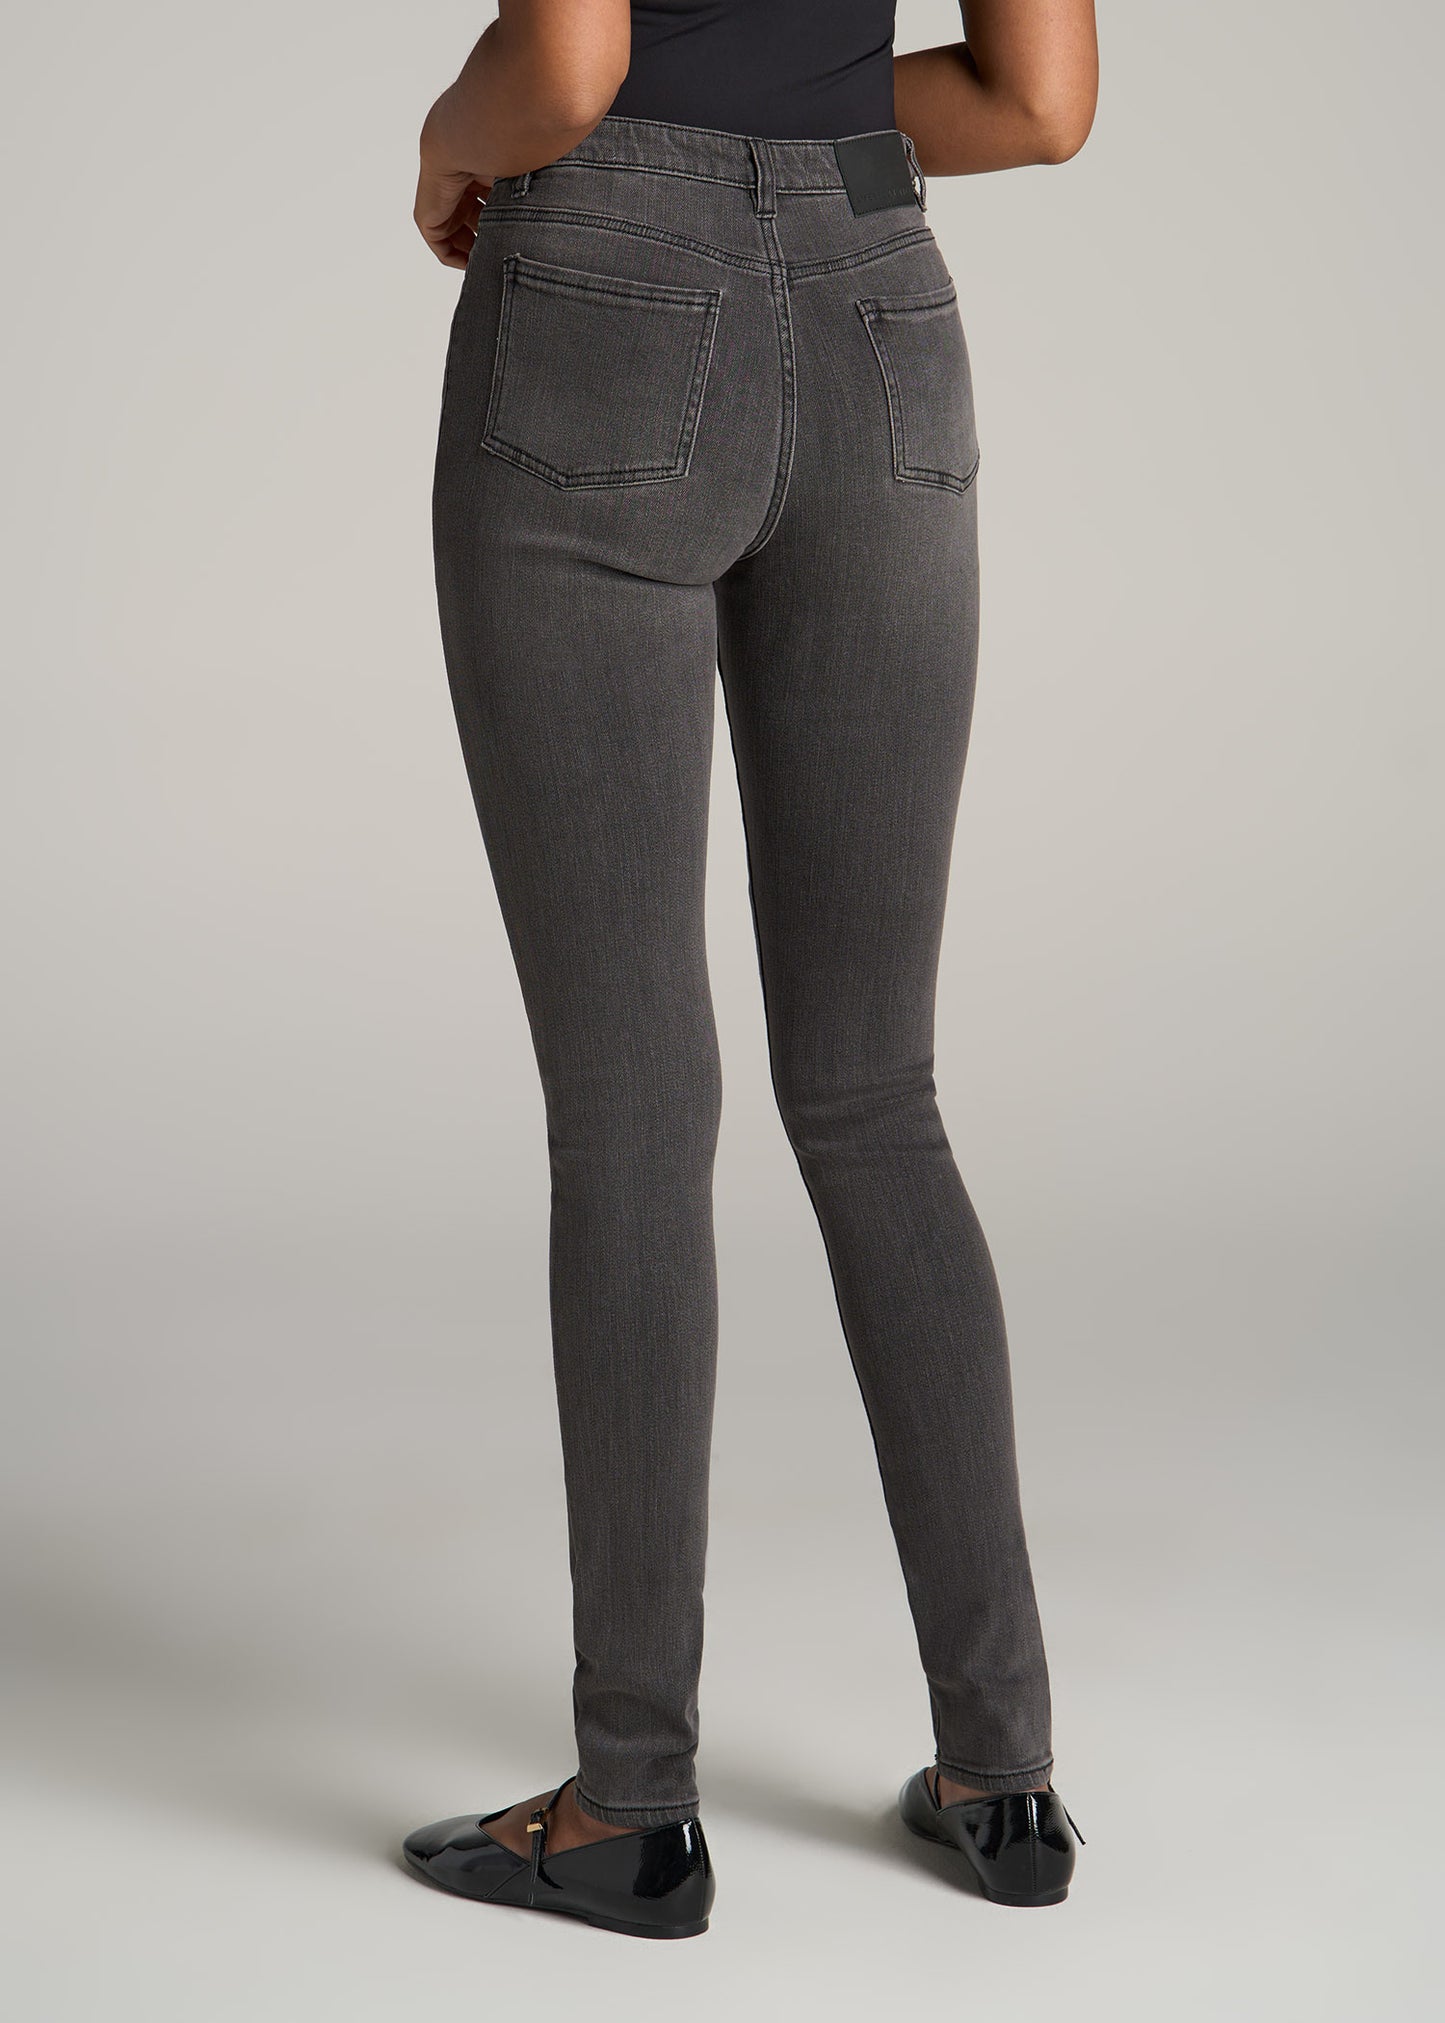 Georgia HIGH RISE SKINNY Tall Women's Jeans in True Grit Grey